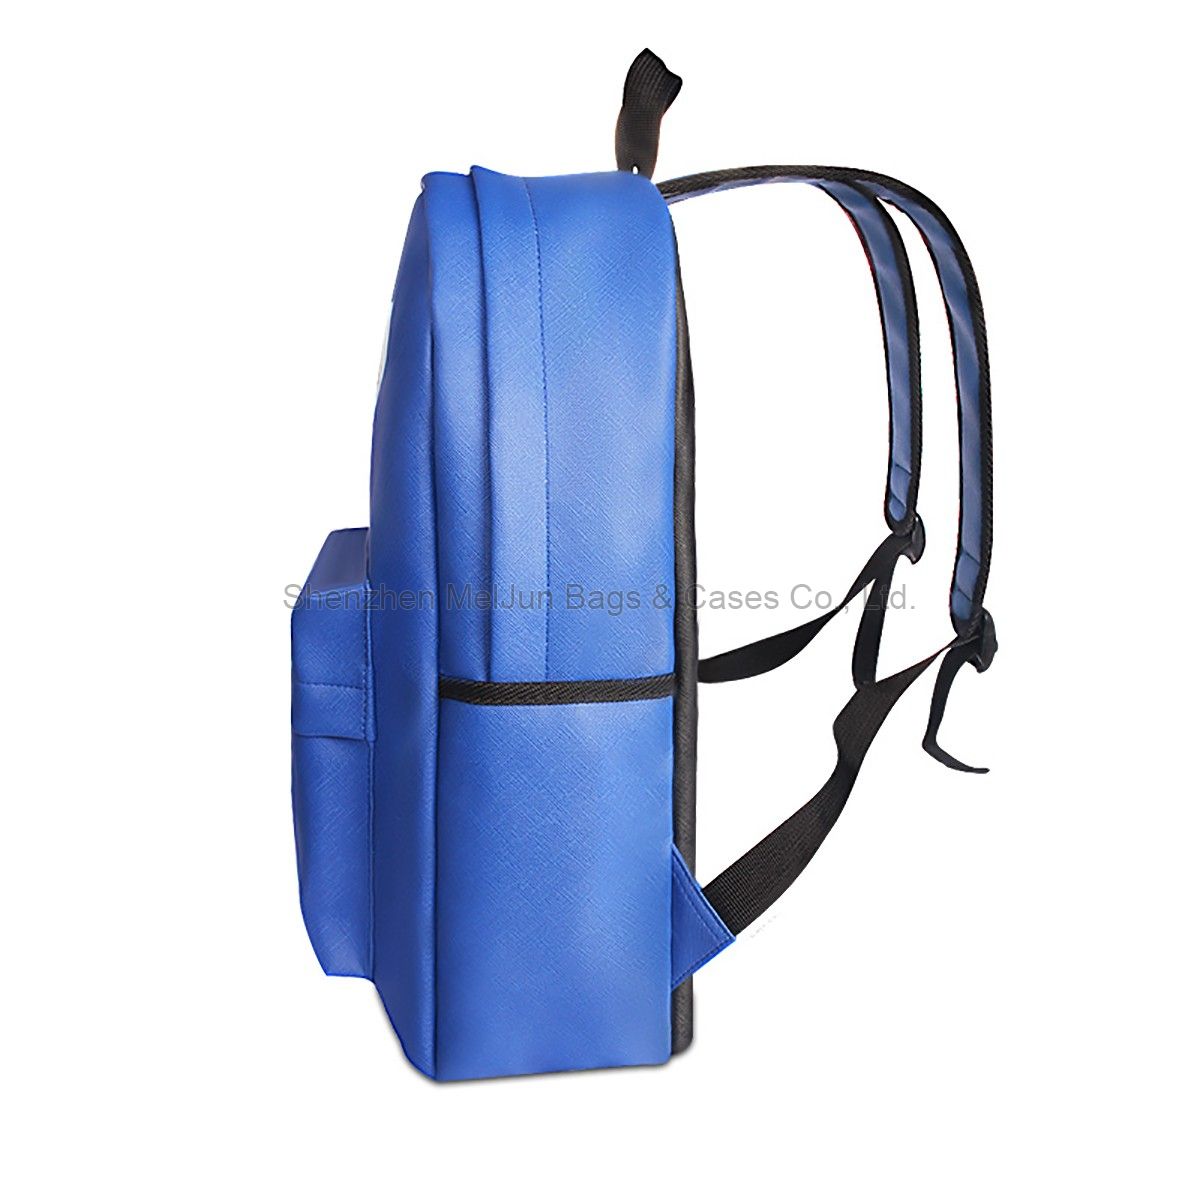 Super Fine Fashion Urban Portable waterproof PU Portable Casual Student Backpack